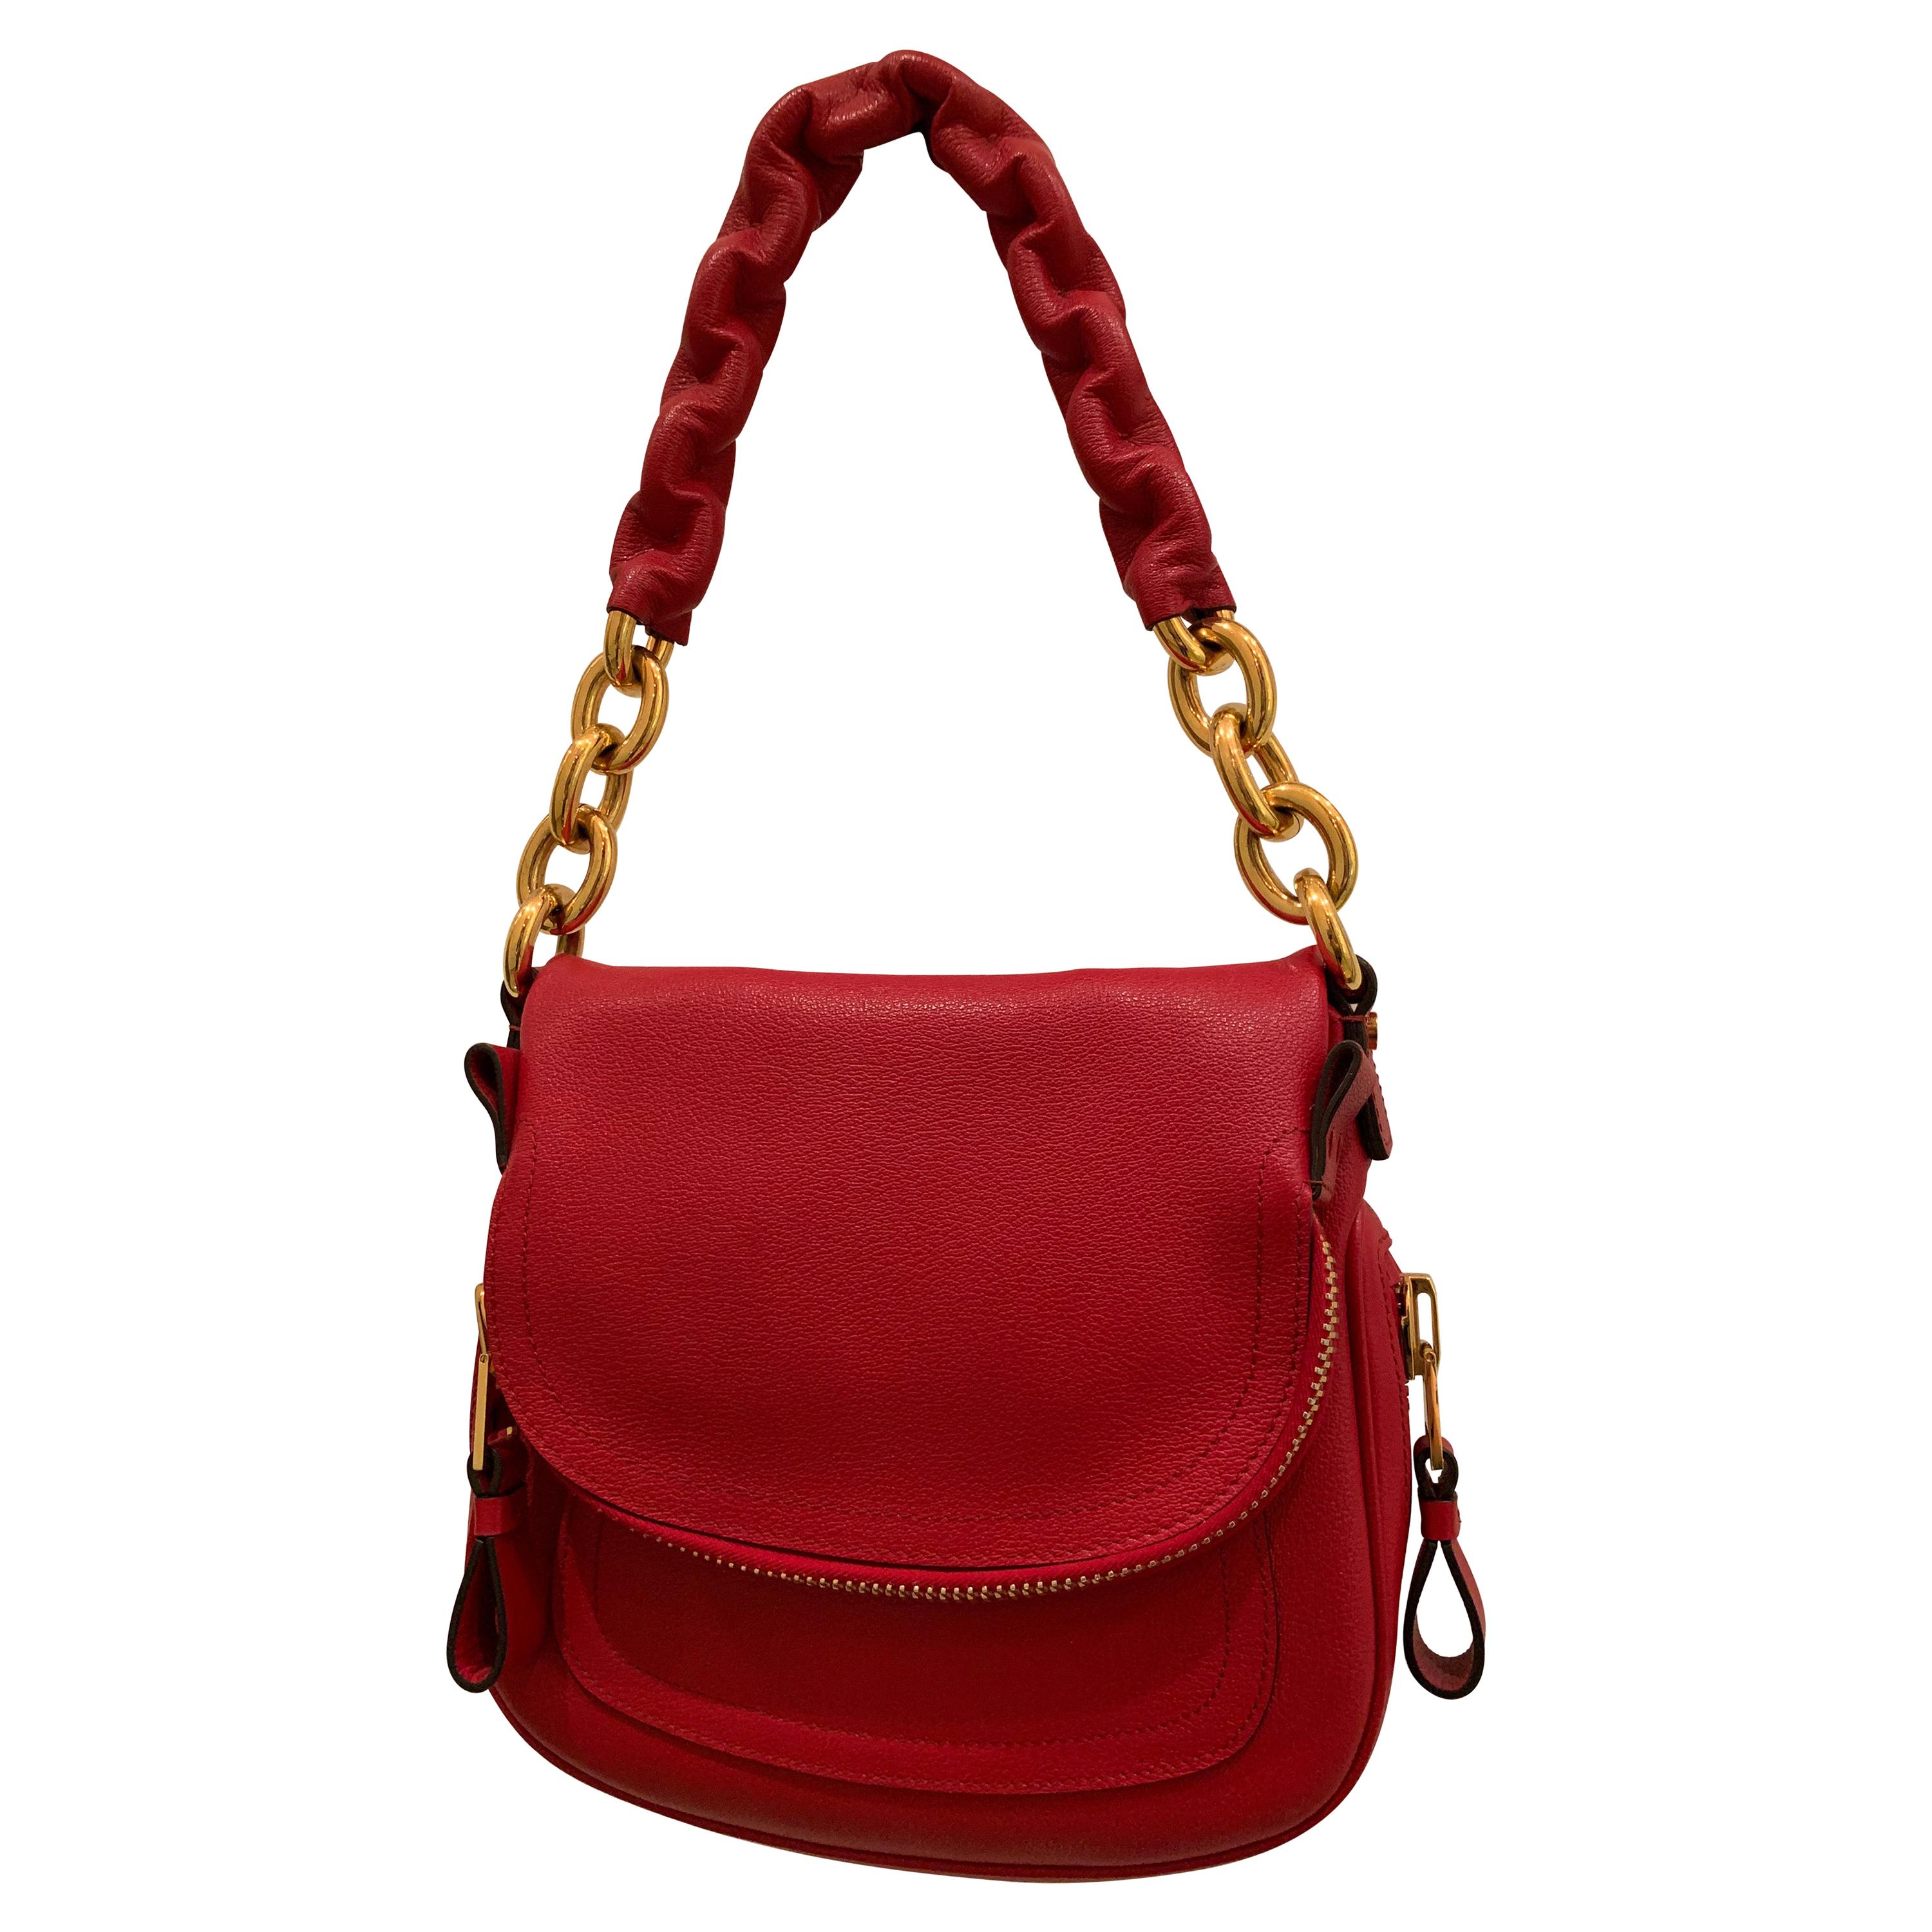 New Tom Ford Crimson Textured Leather Saddlebag-Style Shoulder Bag W/ Gold Chain